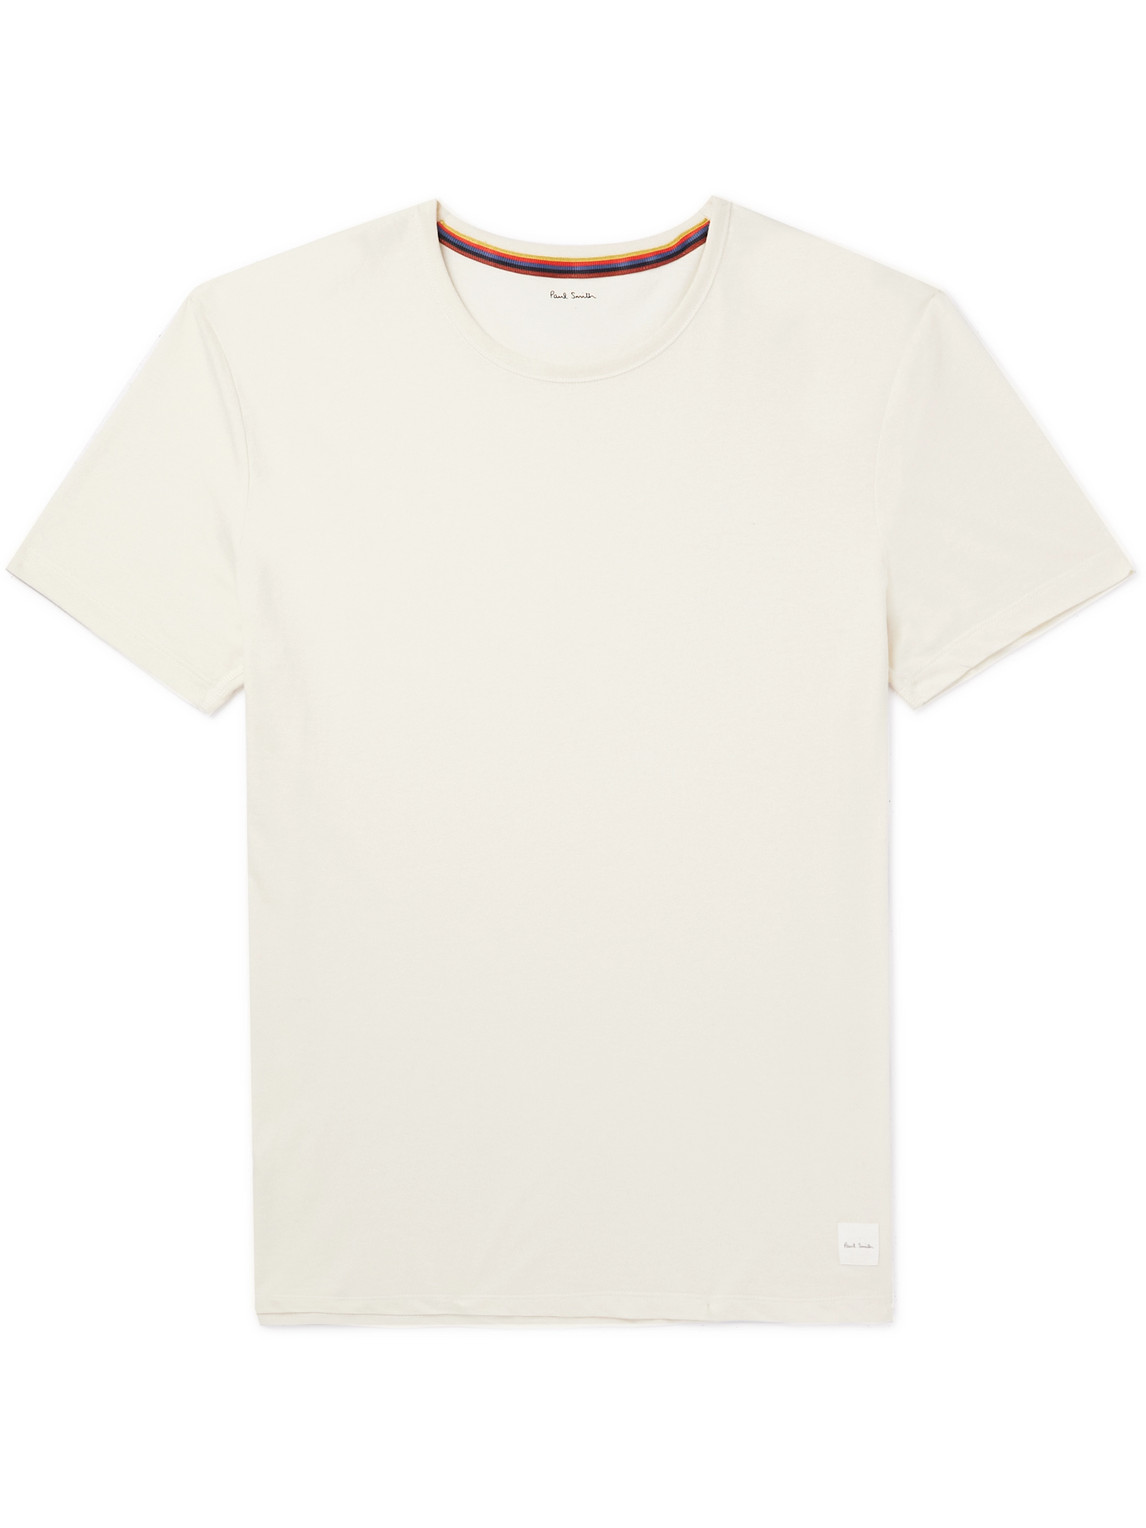 Paul Smith Cotton-Jersey T-Shirt